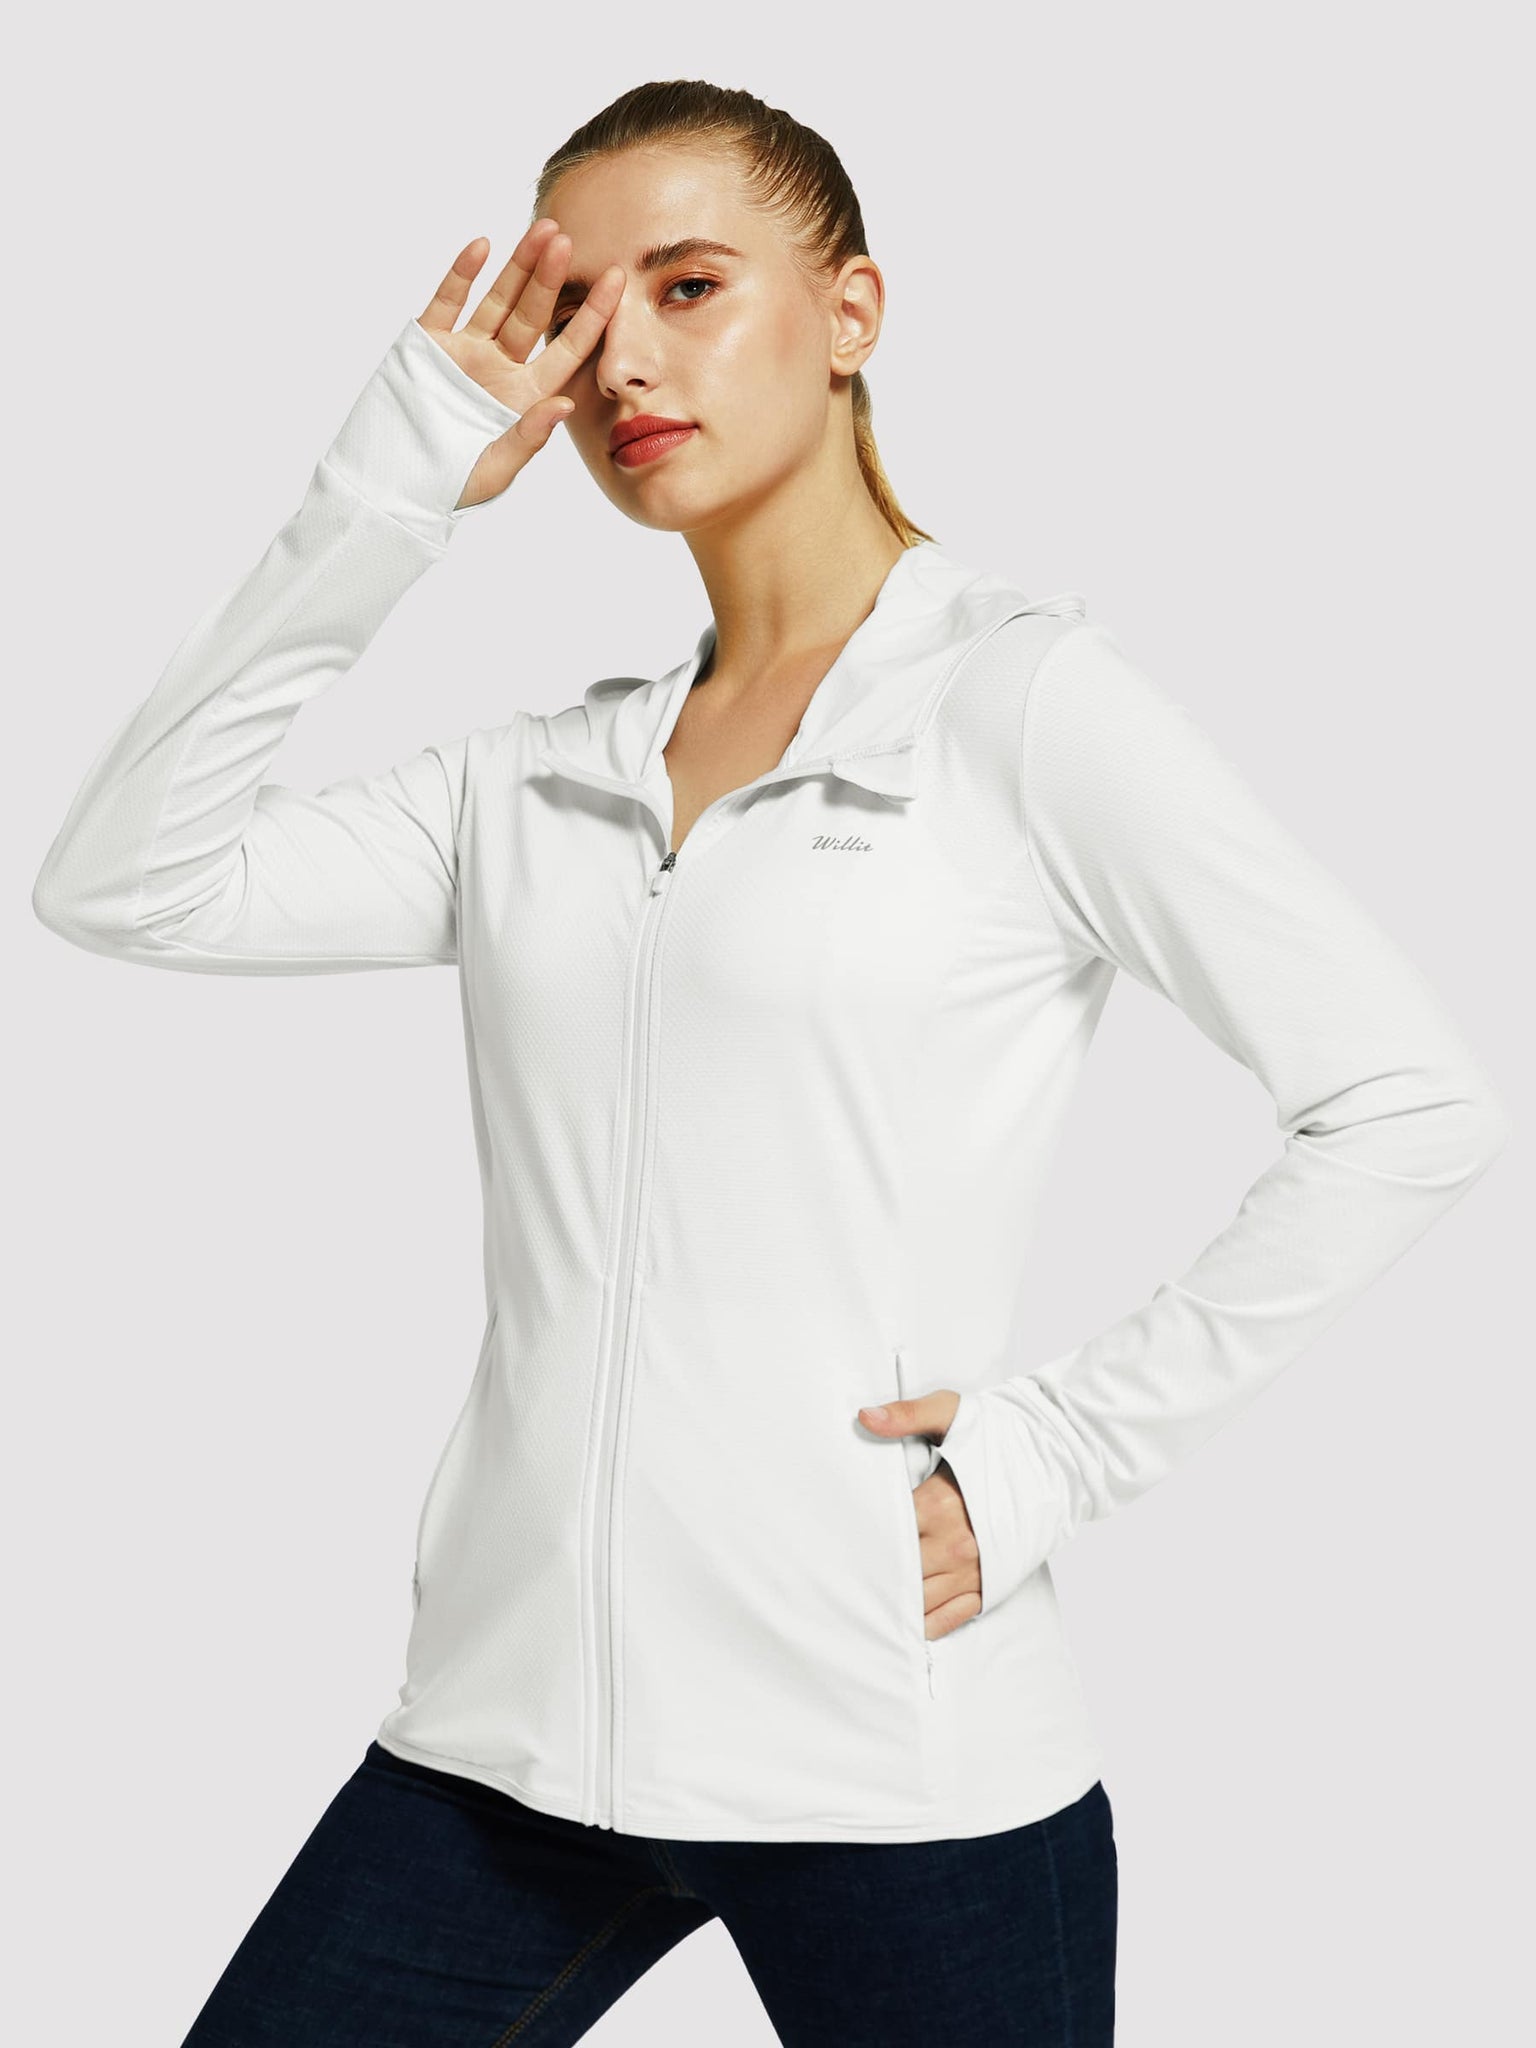 Willit Women's Outdoor Sun Protection Jacket Full Zip_White_model2